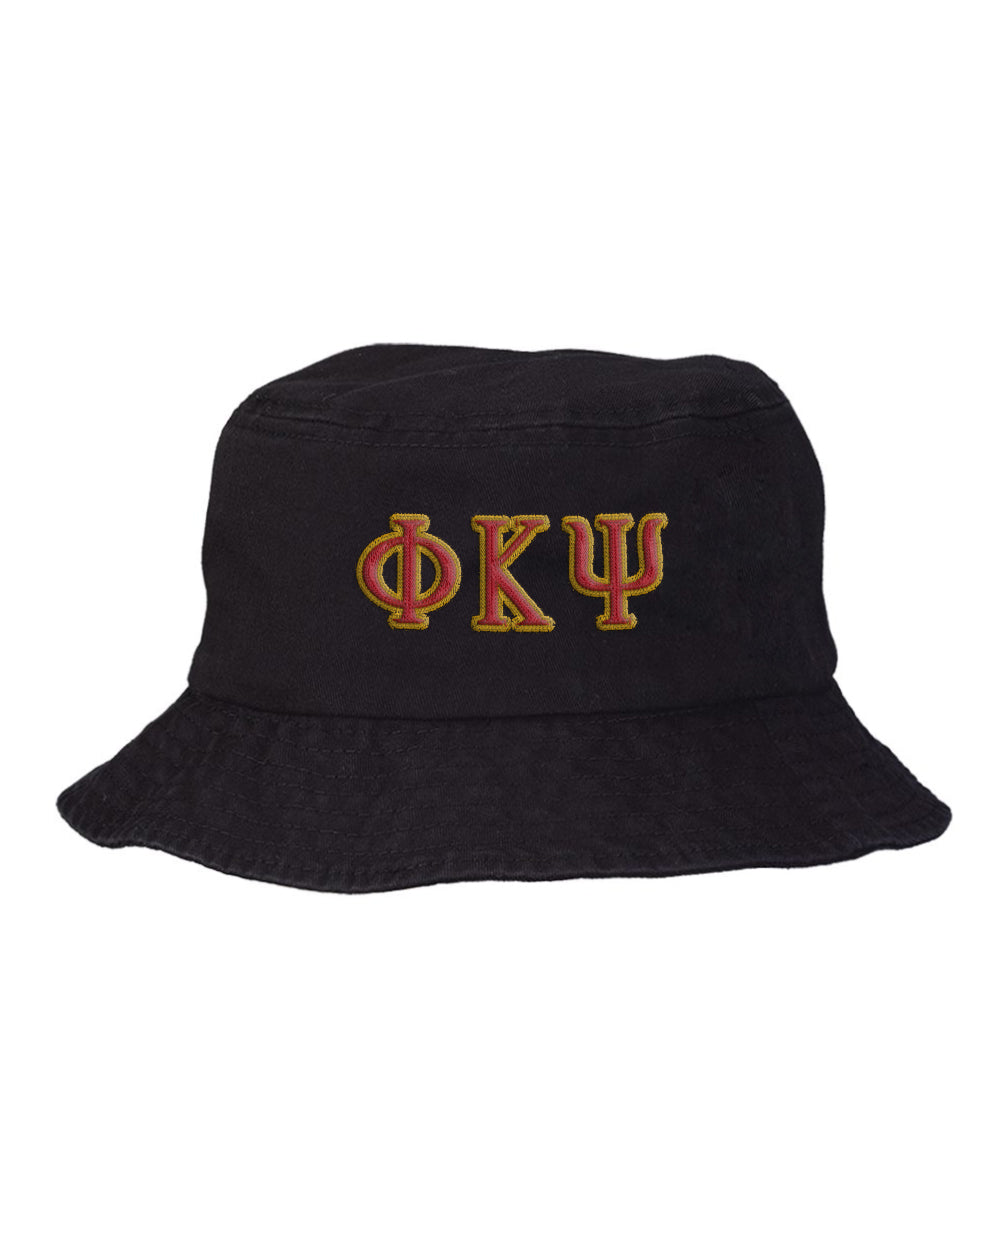 Phi Kappa Psi Embroidered Bucket Hat